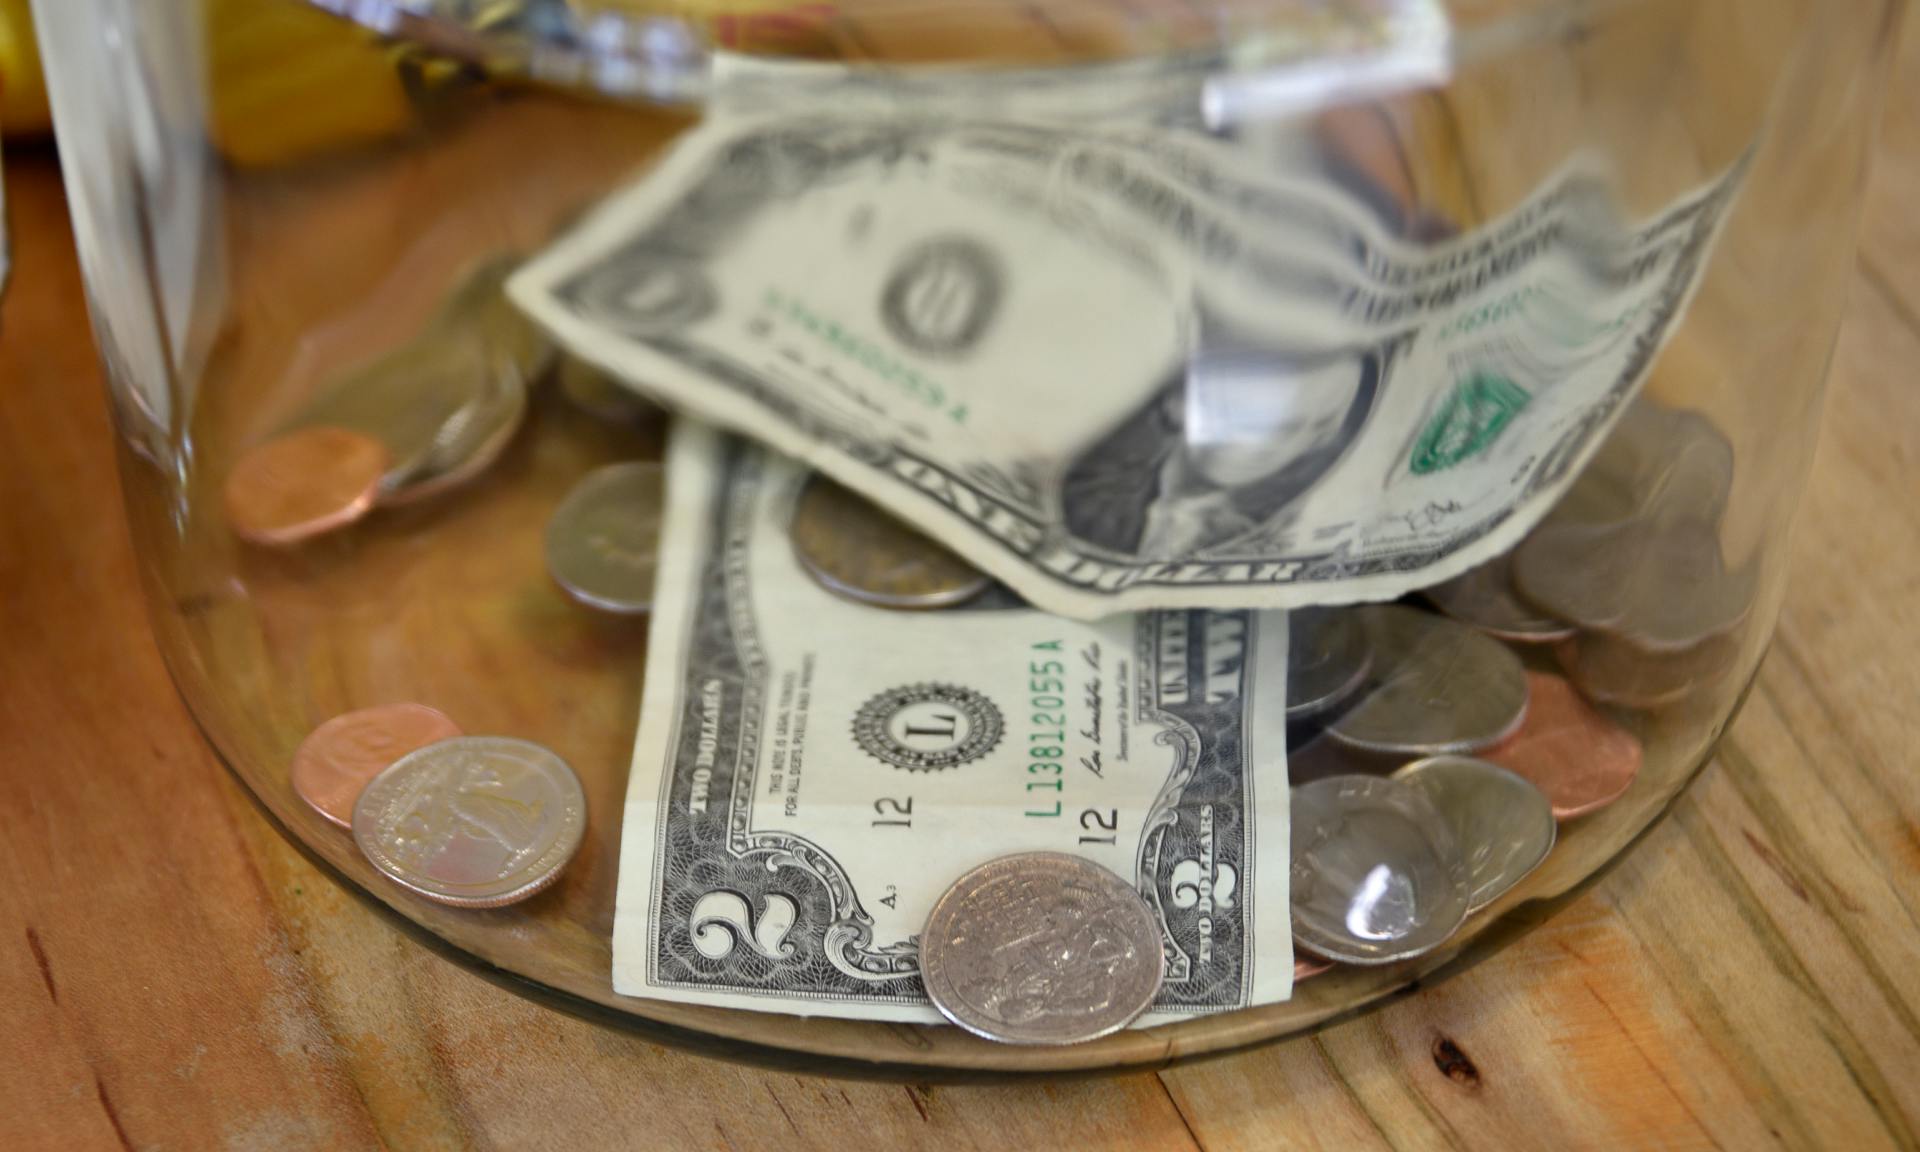 Cash in a tipping jar